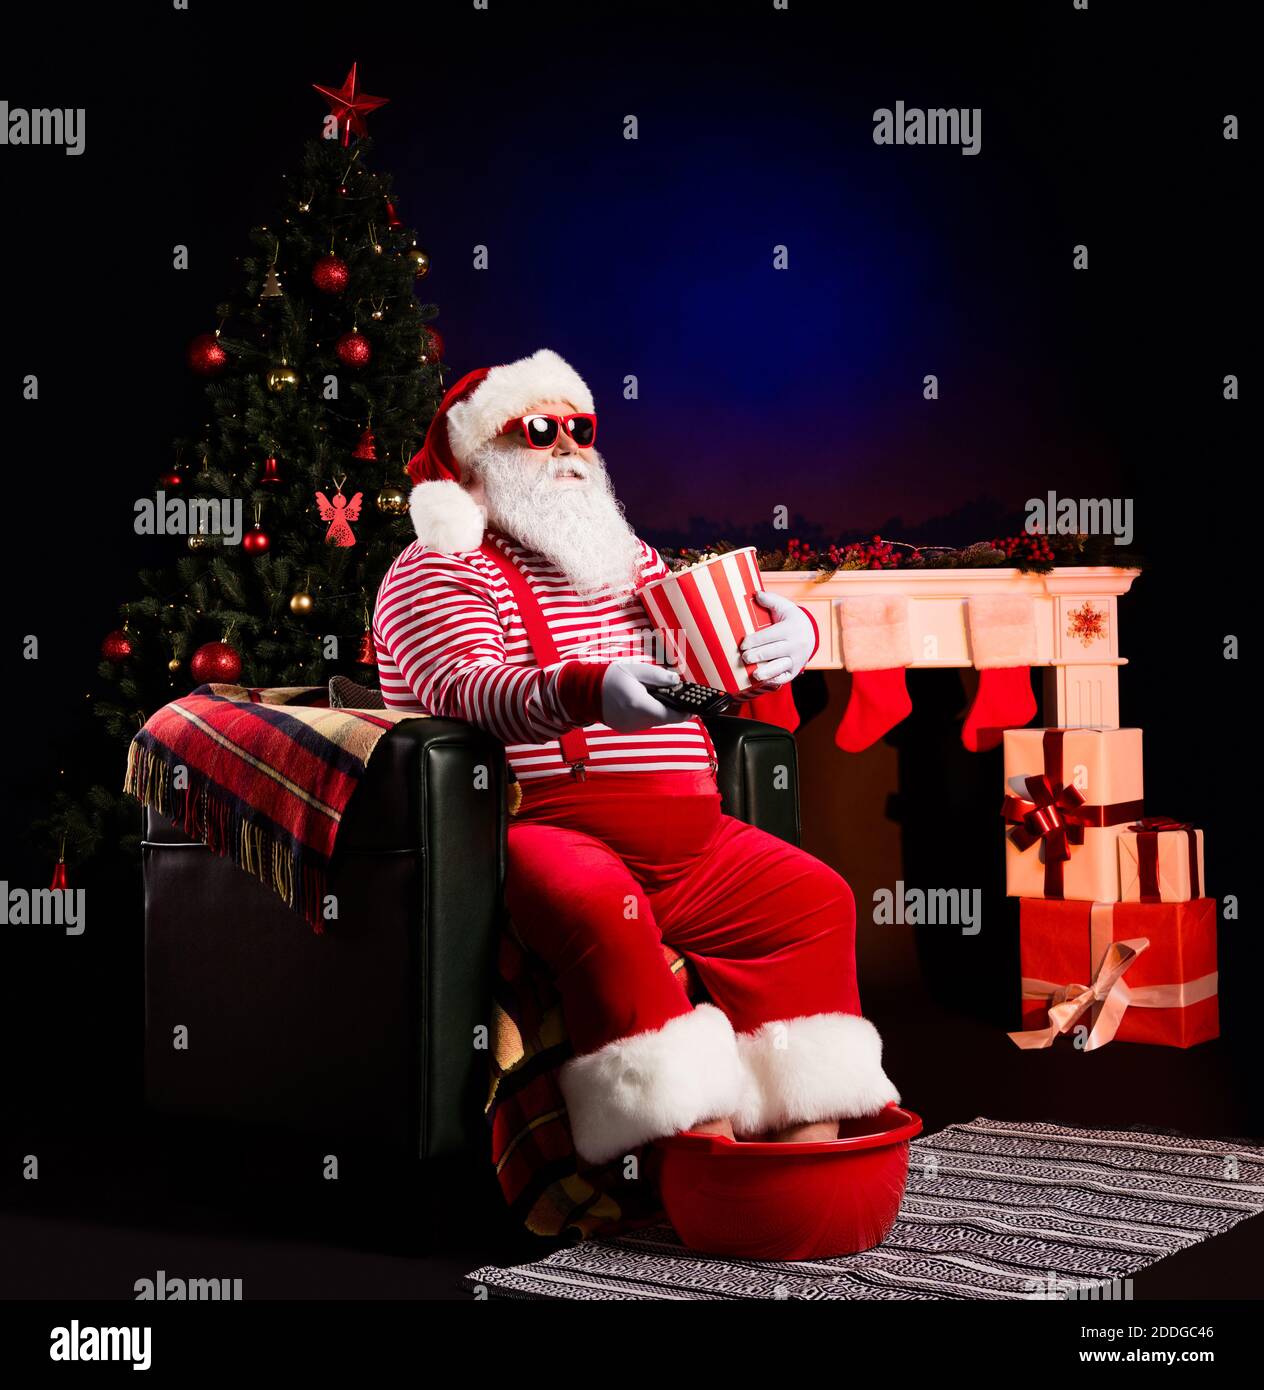 https://c8.alamy.com/comp/2DDGC46/funny-santa-hold-remote-control-popcorn-box-legs-basin-wear-x-mas-costume-cap-sunglass-isolated-decorated-black-background-2DDGC46.jpg